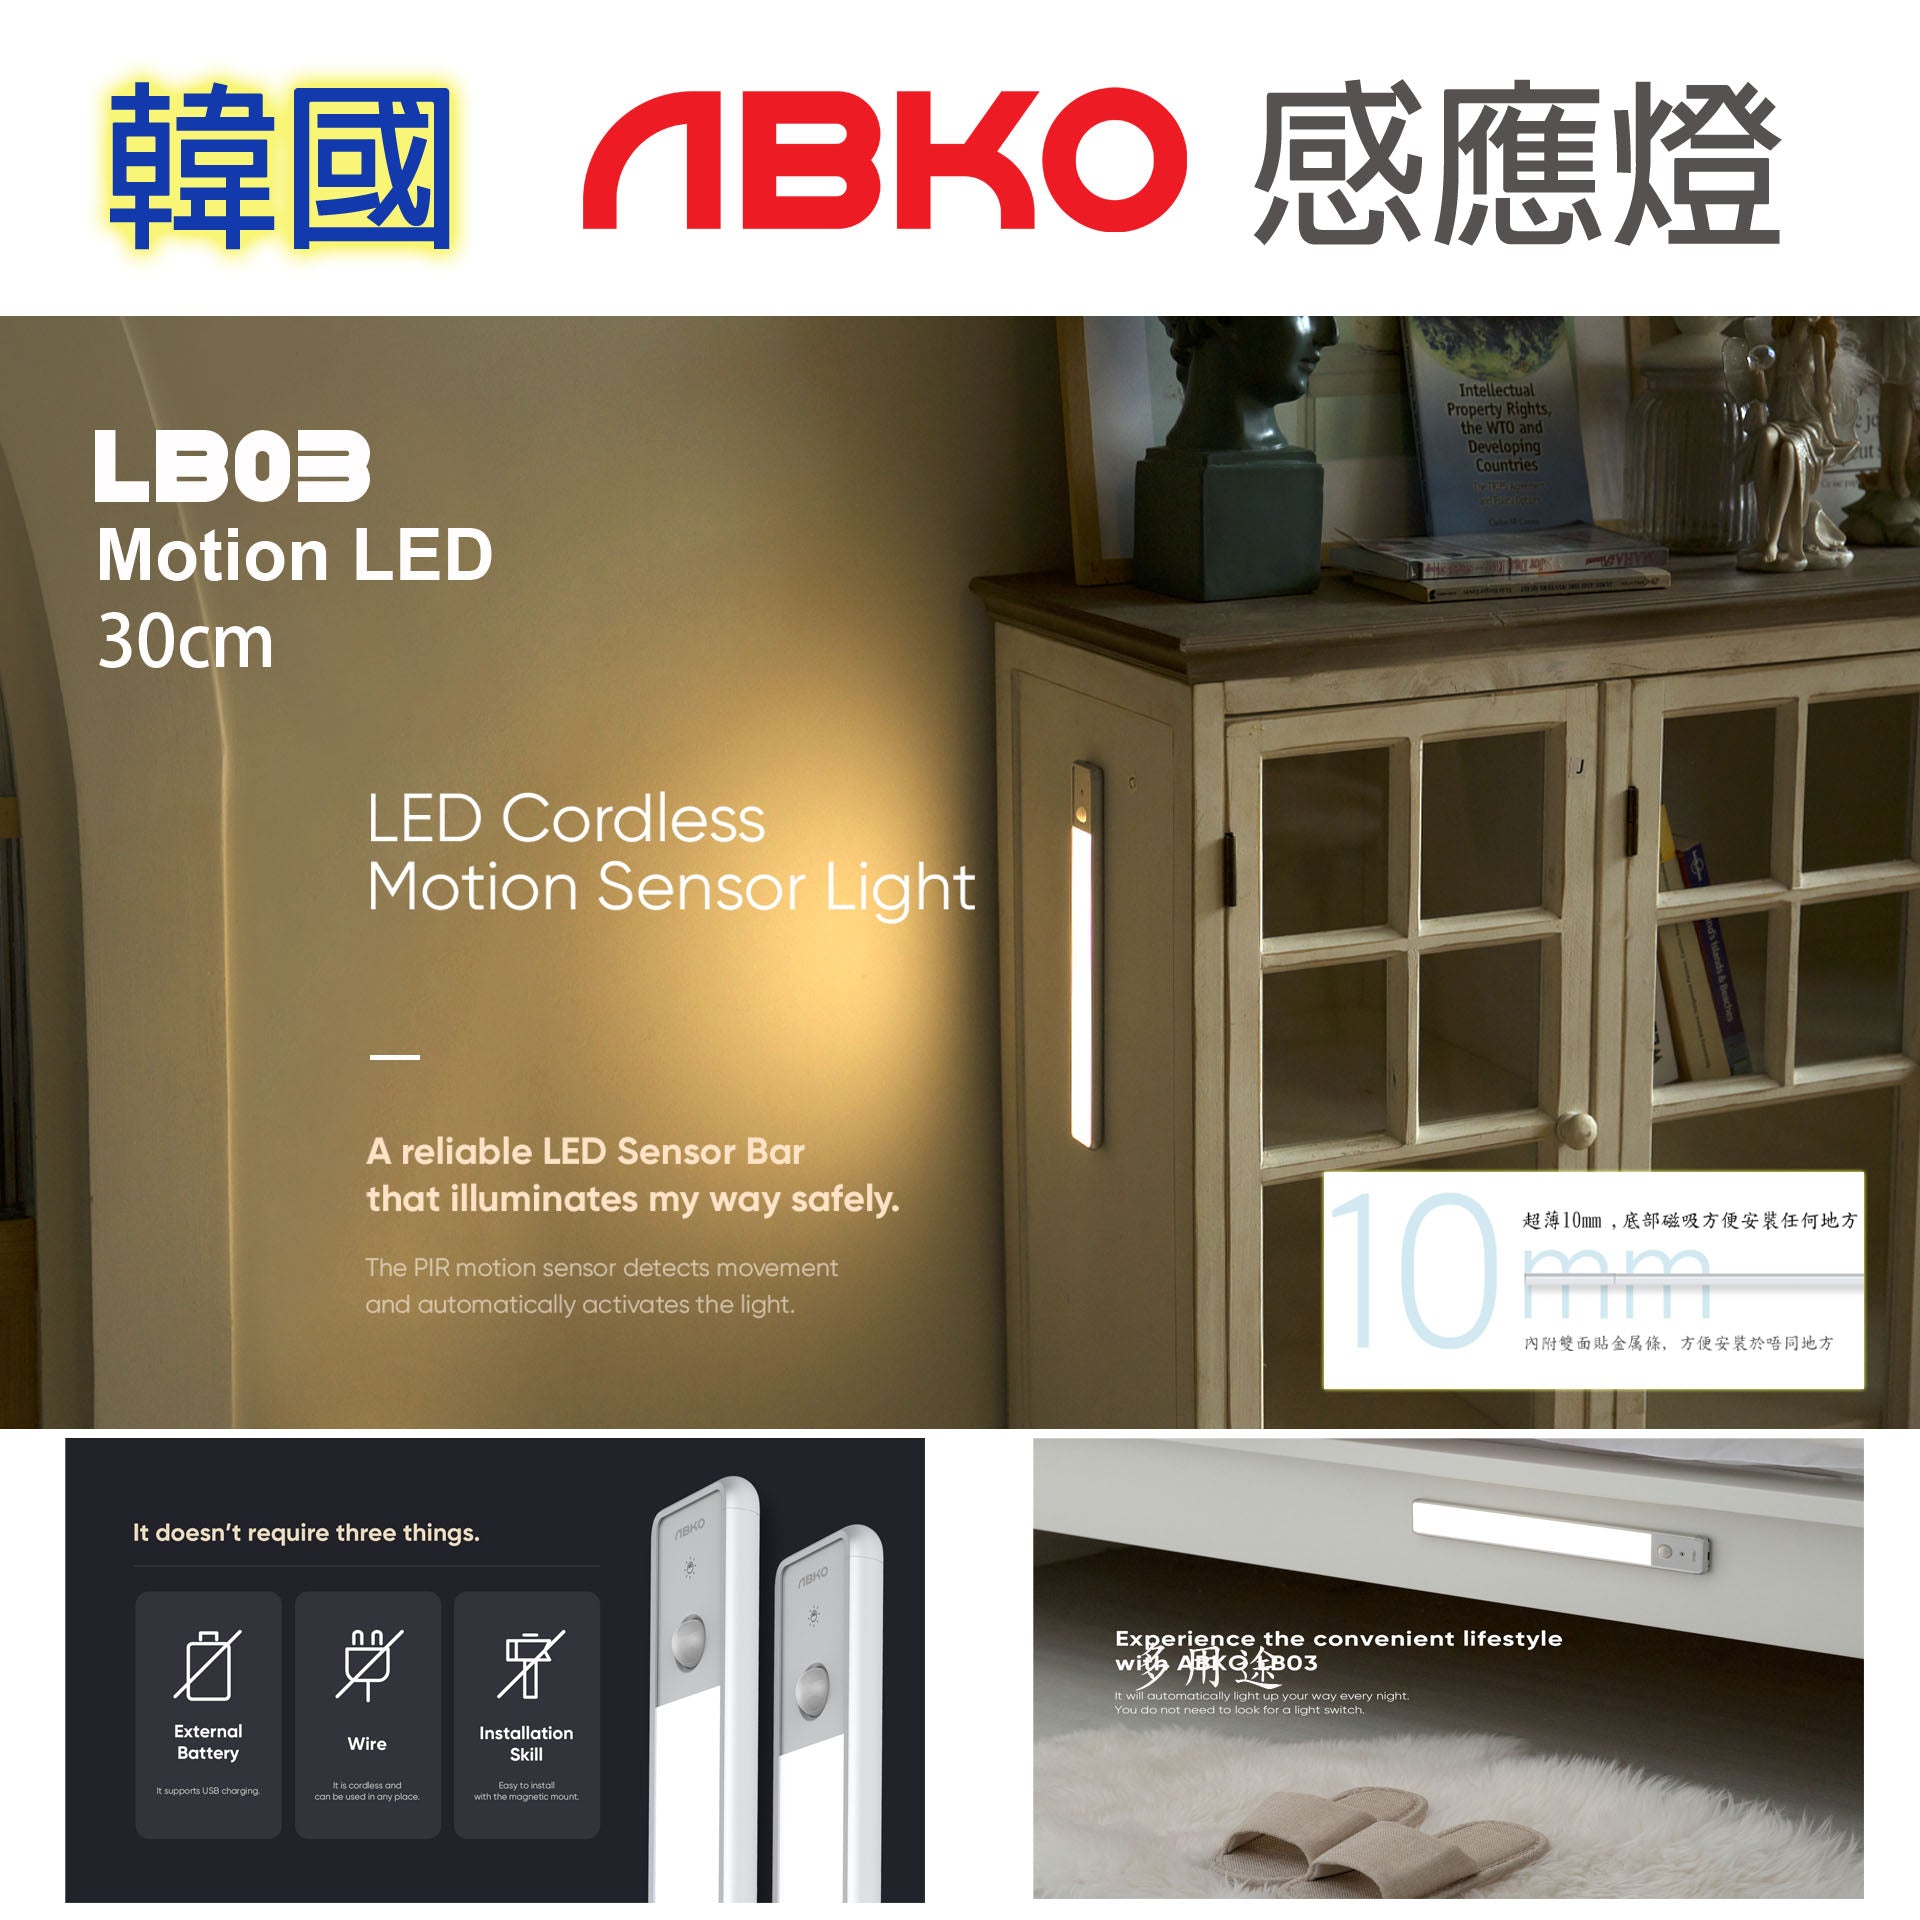 韓國 ABKO LB03 LED Cordless Motion Sensor Light 30cm 智能感光 / 輕觸按鍵 / 定時 / 充電